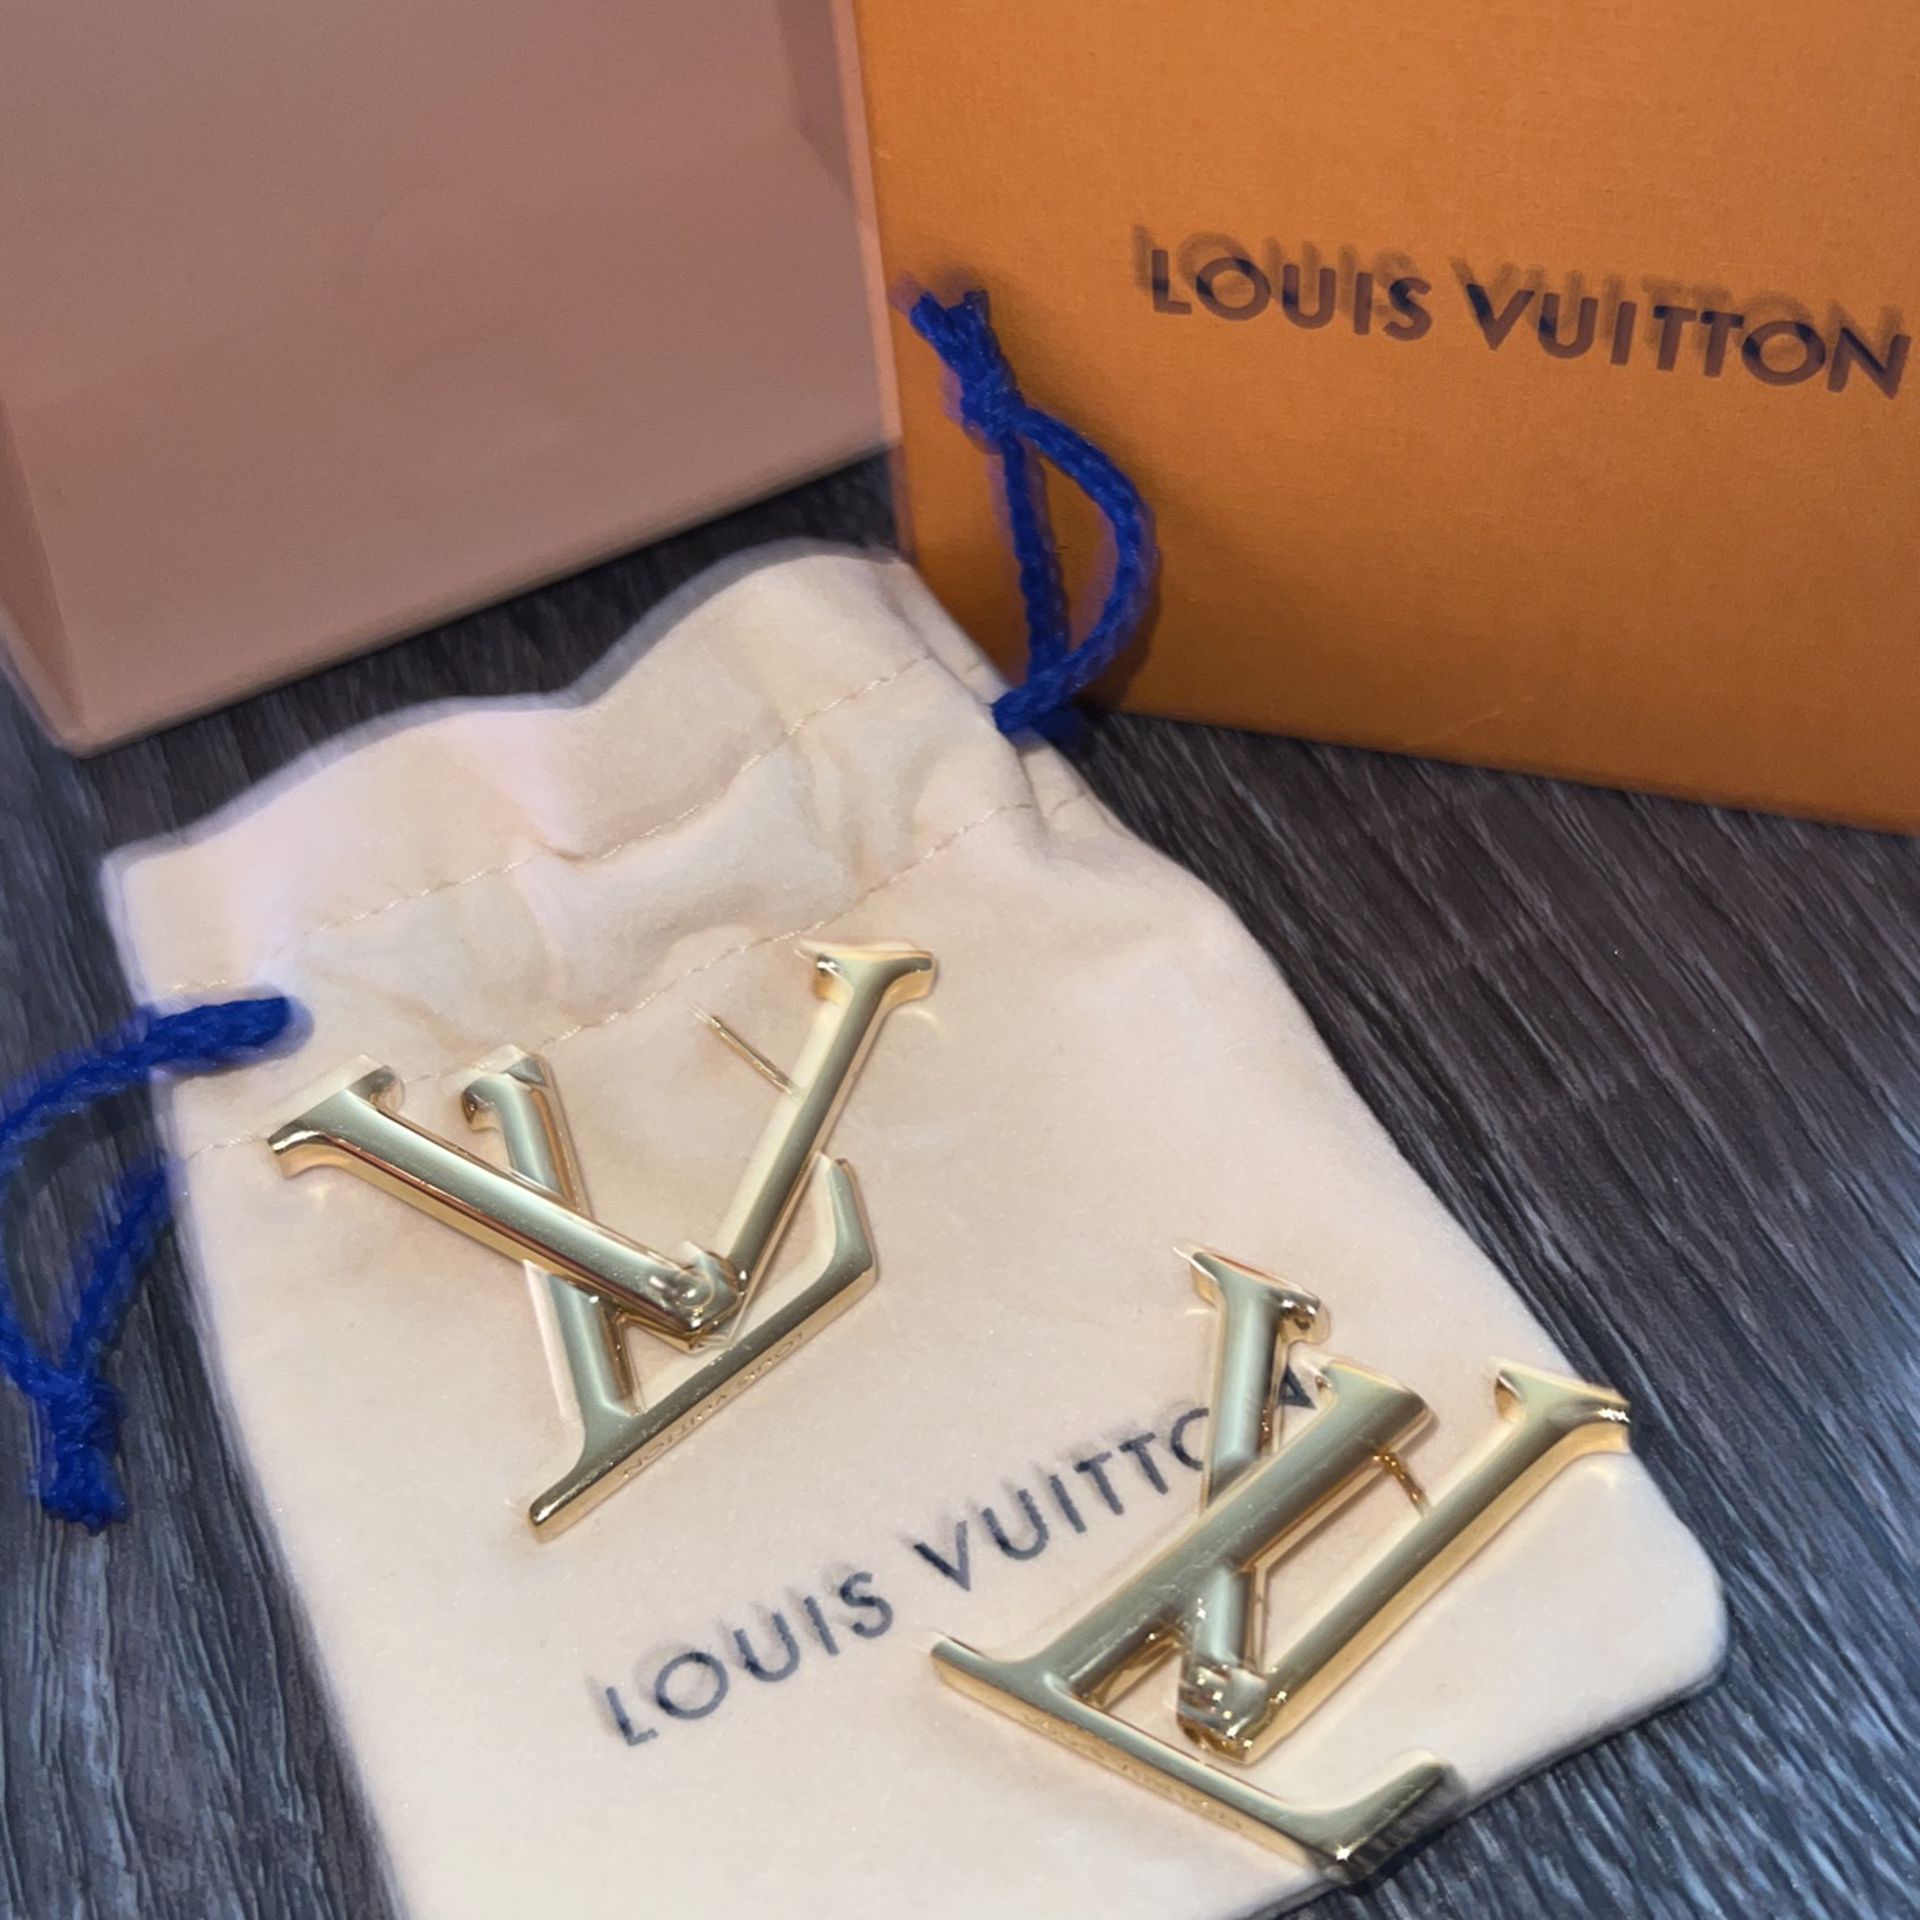 Buy Cheap Louis Vuitton Earrings #9999926810 from